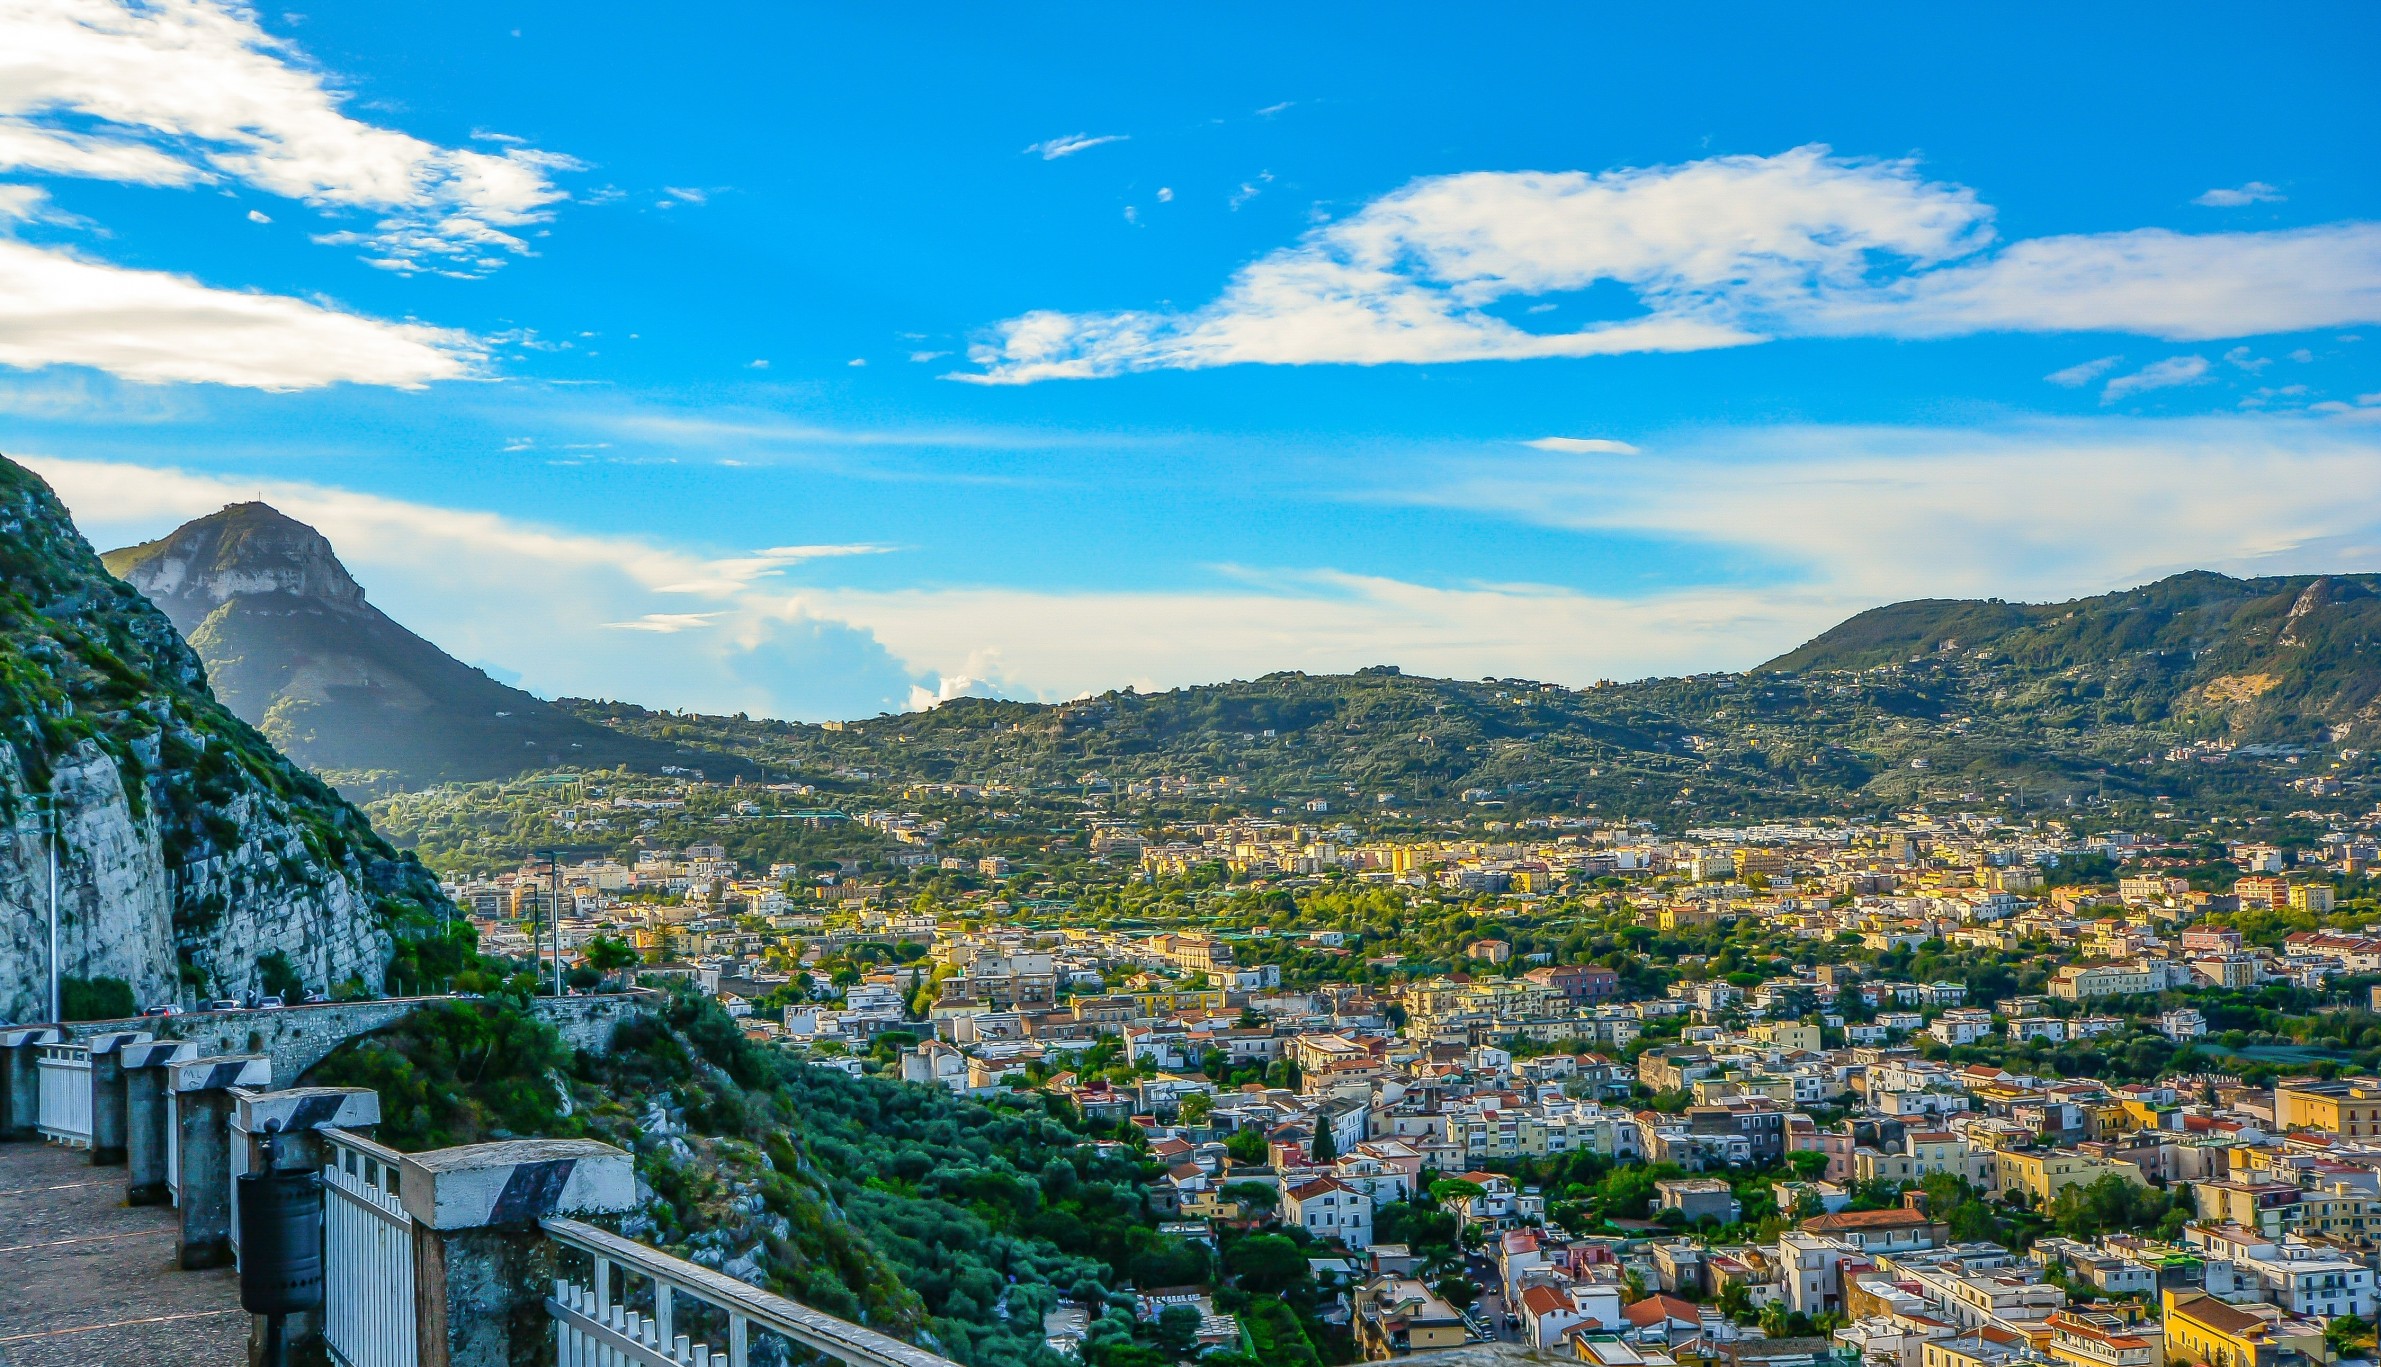 Download 2381x1367 Italy, Amalfi, Landscape, Buildings, Cityscape